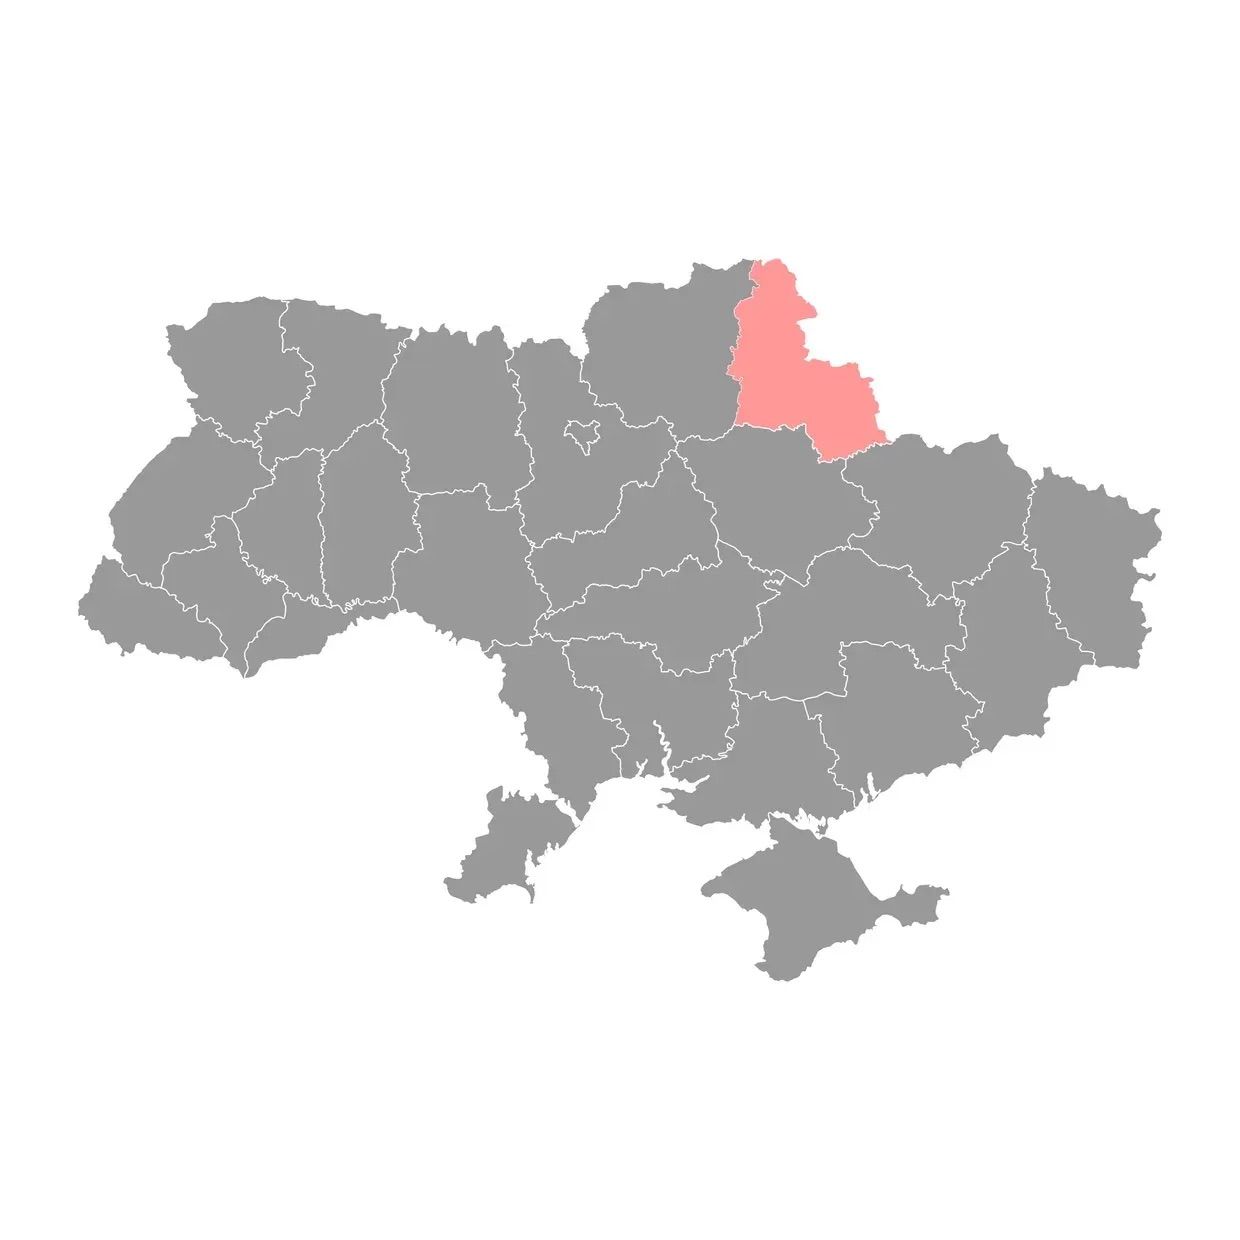 Russia shells 4 communities in Sumy Oblast